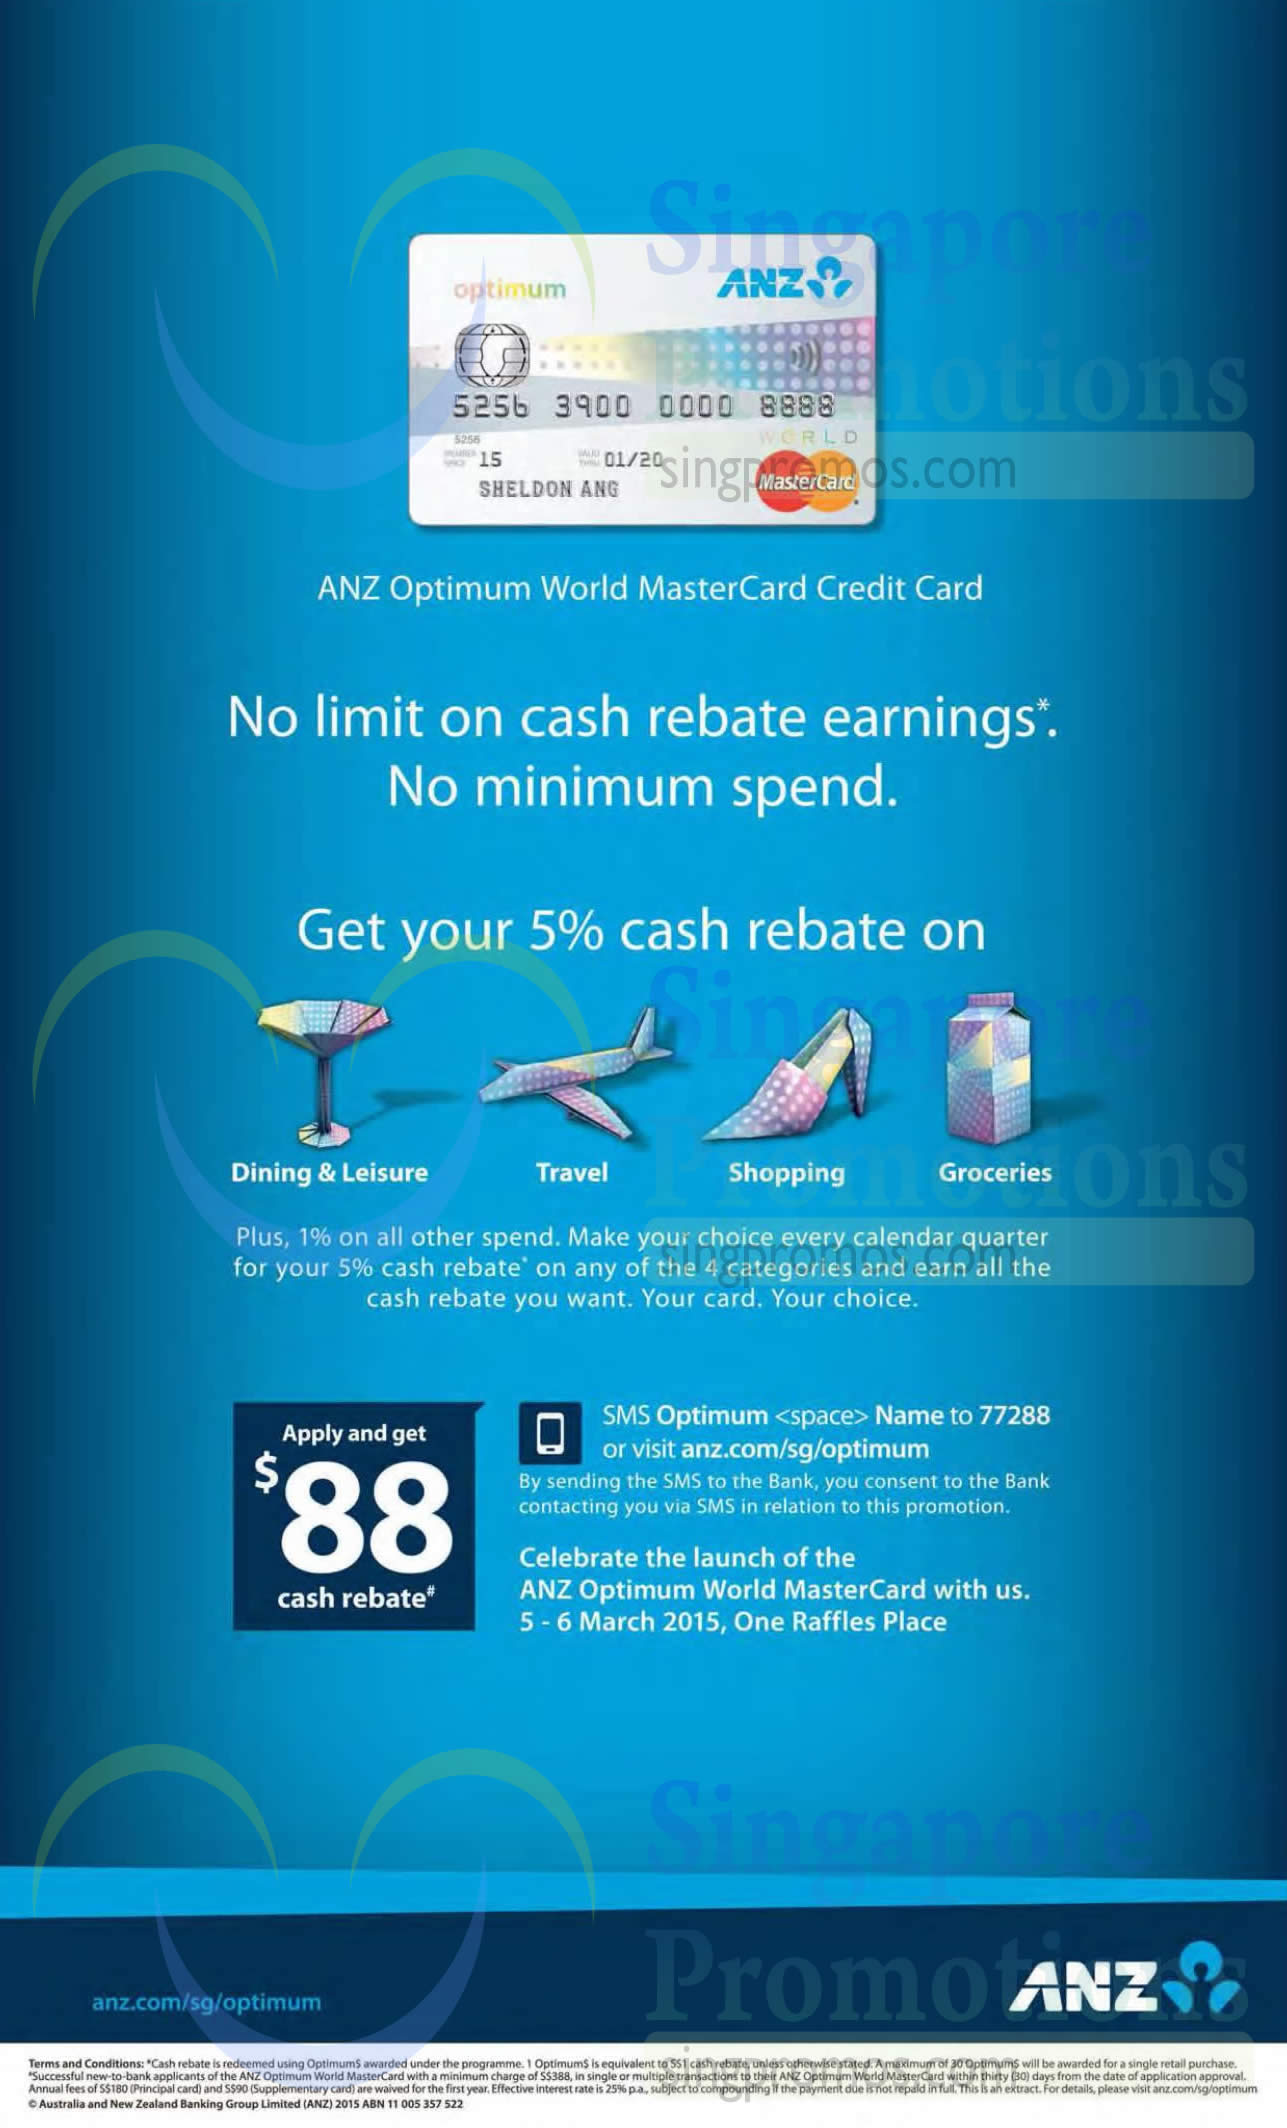 ANZ New 5 Cash Rebate Optimum World MasterCard Credit Card 5 Mar 2015